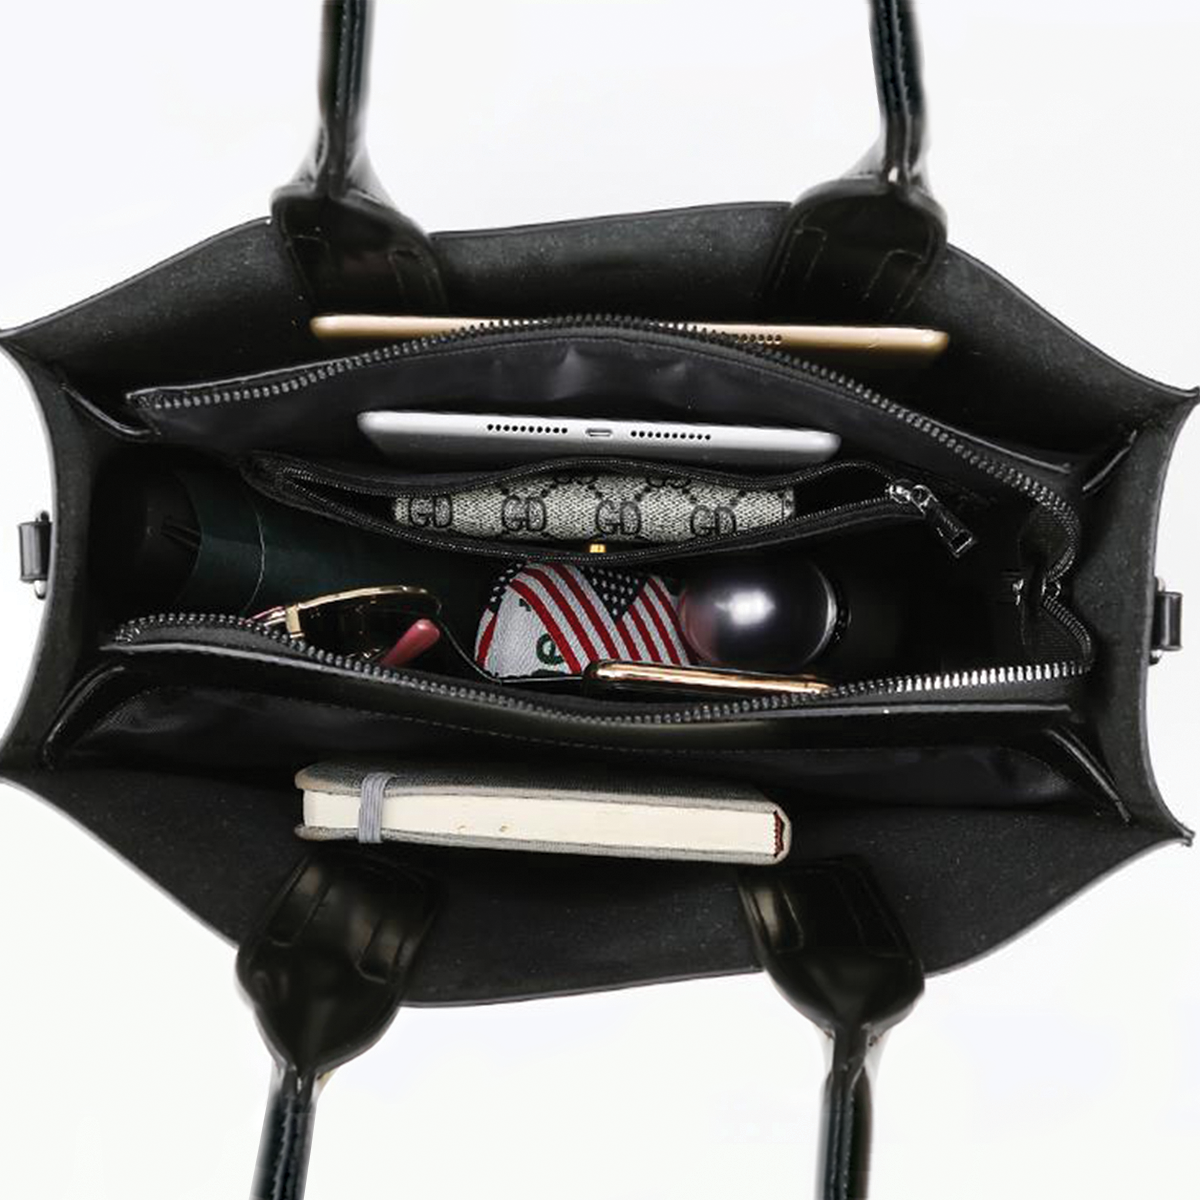 Scottish Fold Cat Luxury Handbag V1